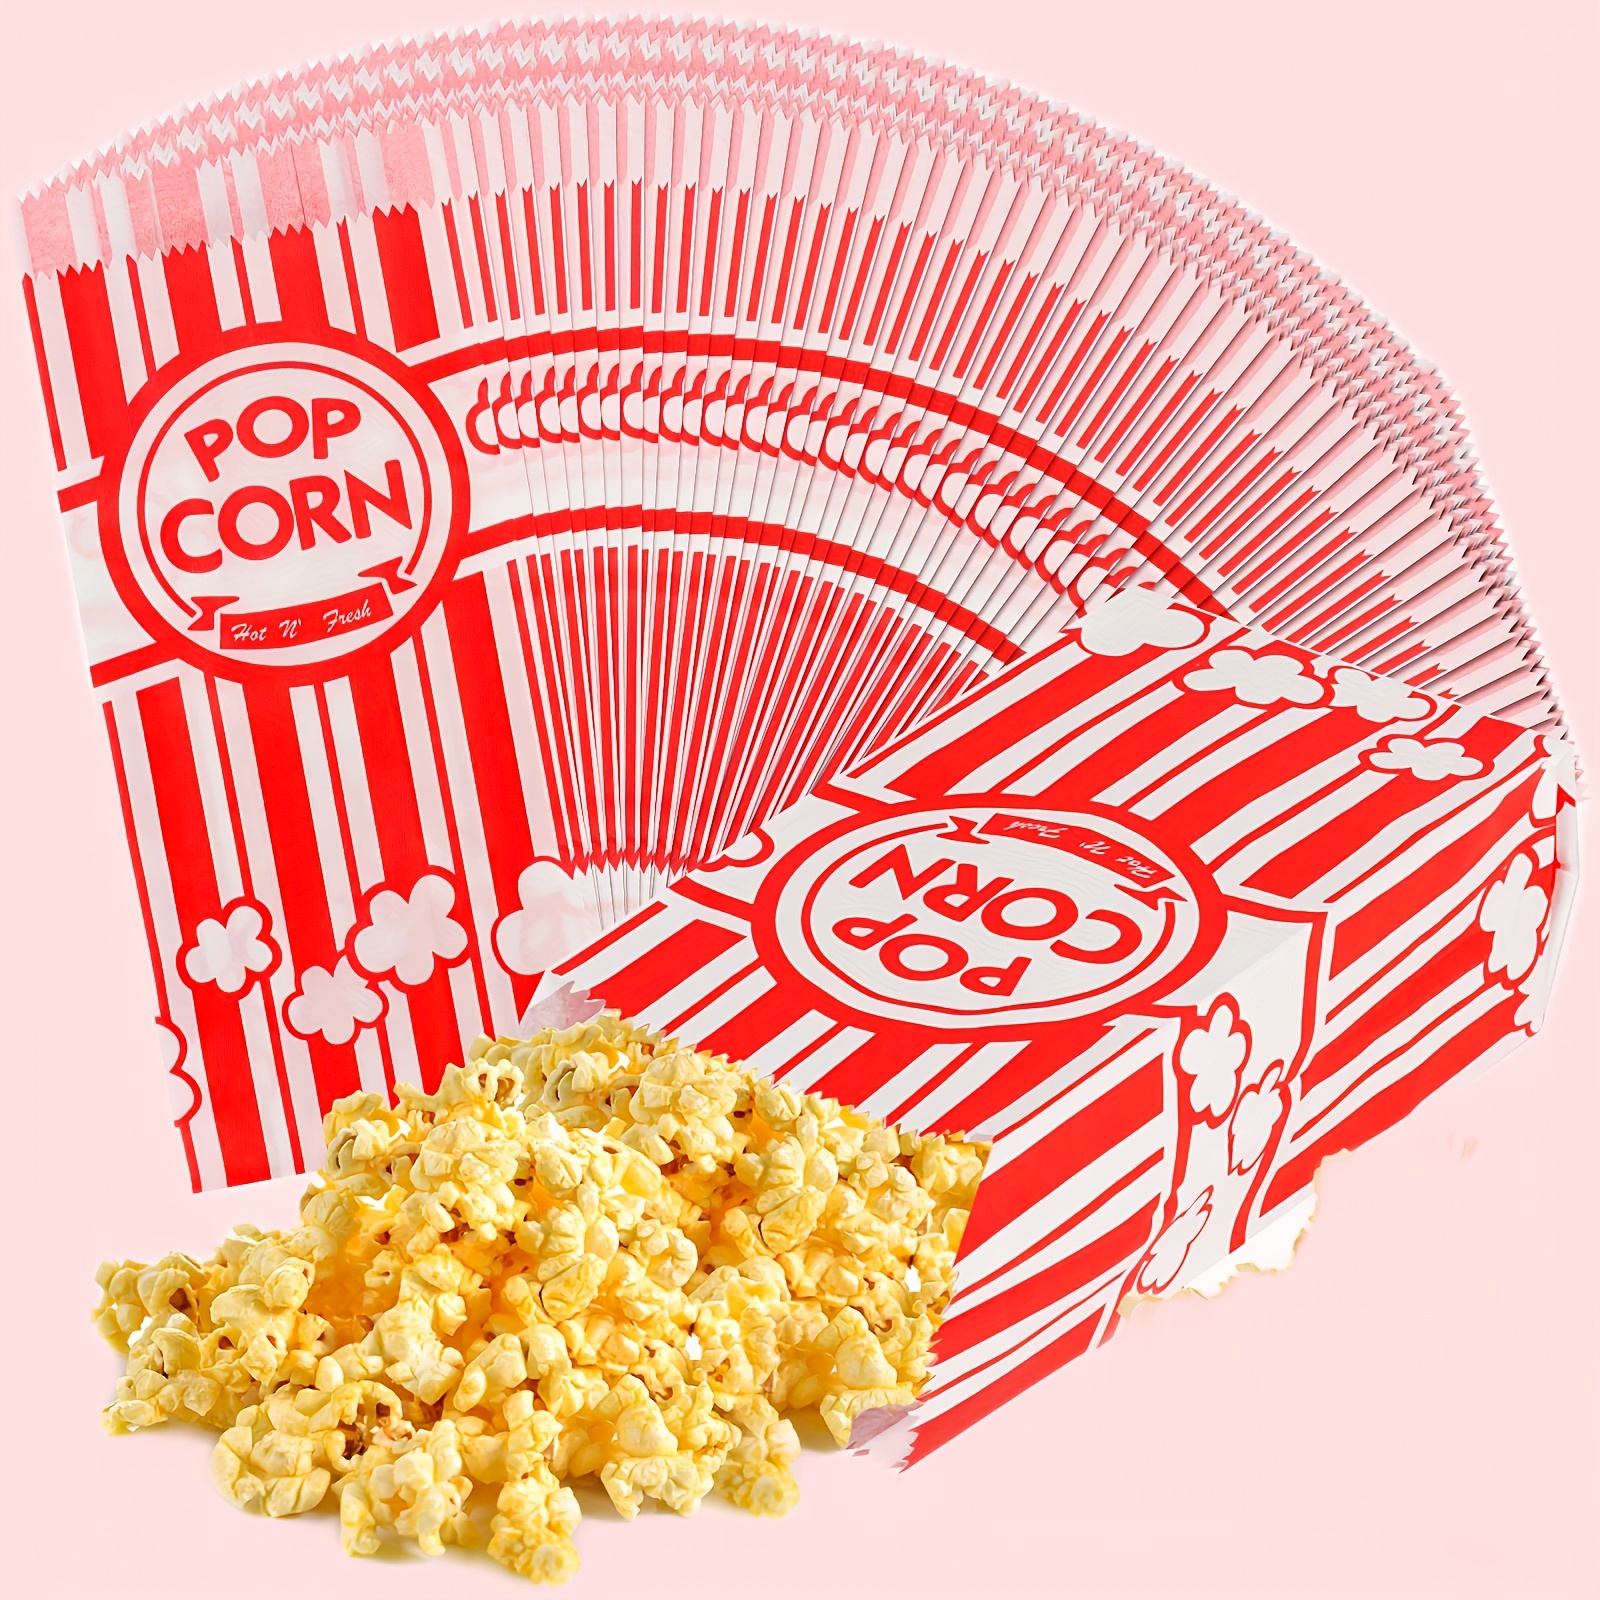 

100pcs, Paper Popcorn Bags, 1oz Concession-grade Bags, Popcorn Machine Accessories For Popcorn Bars, Movie Nights